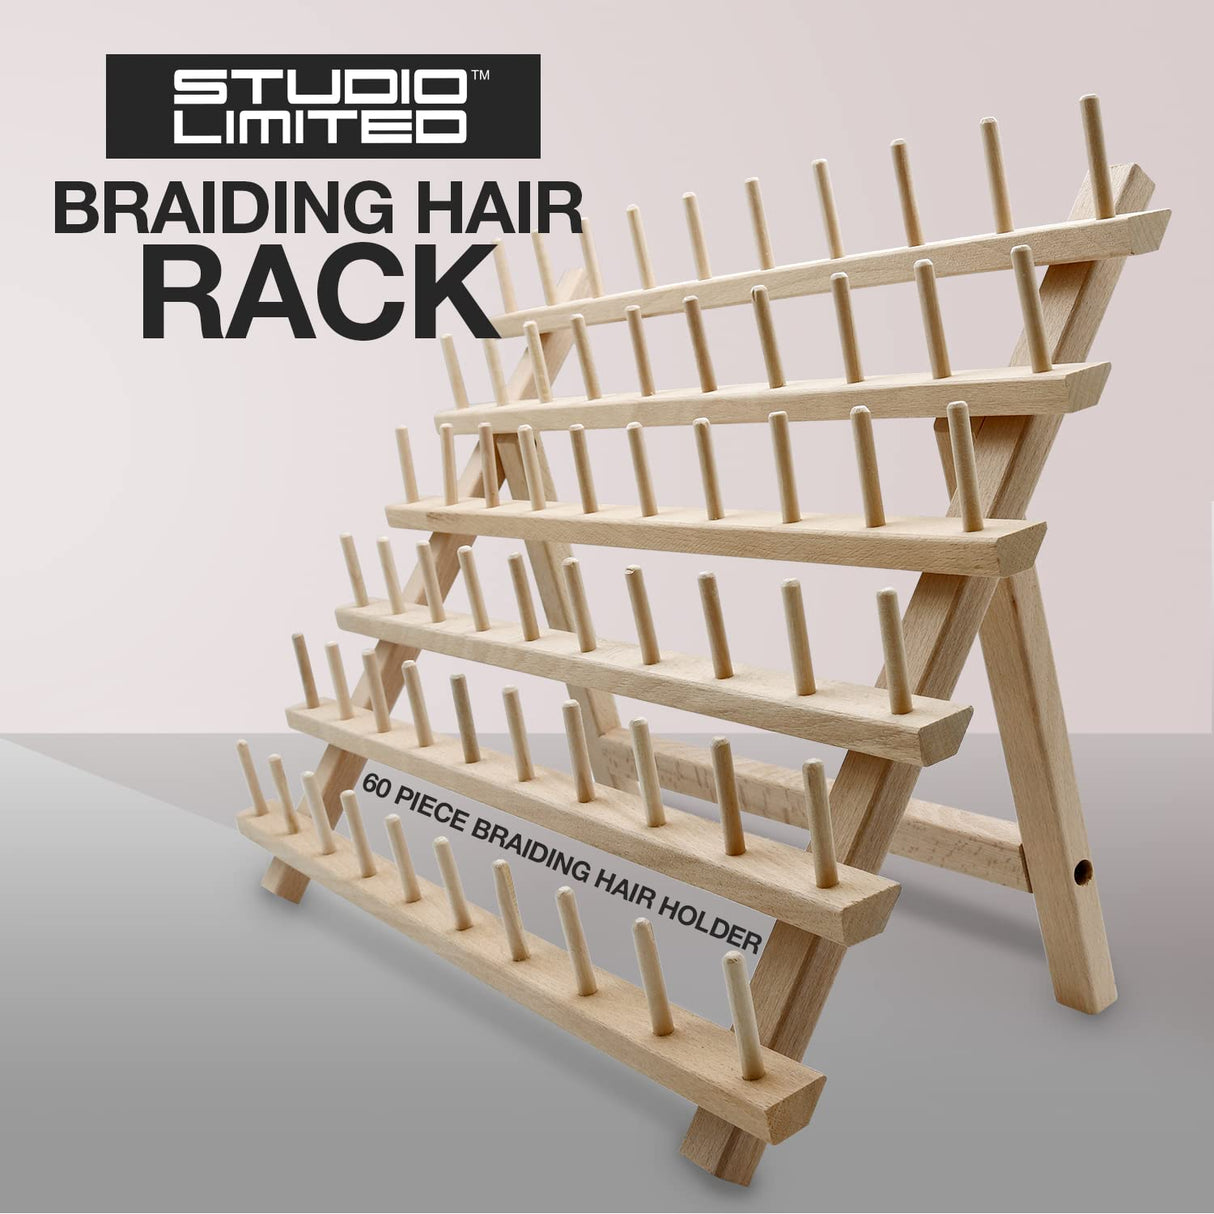 Braid Rack